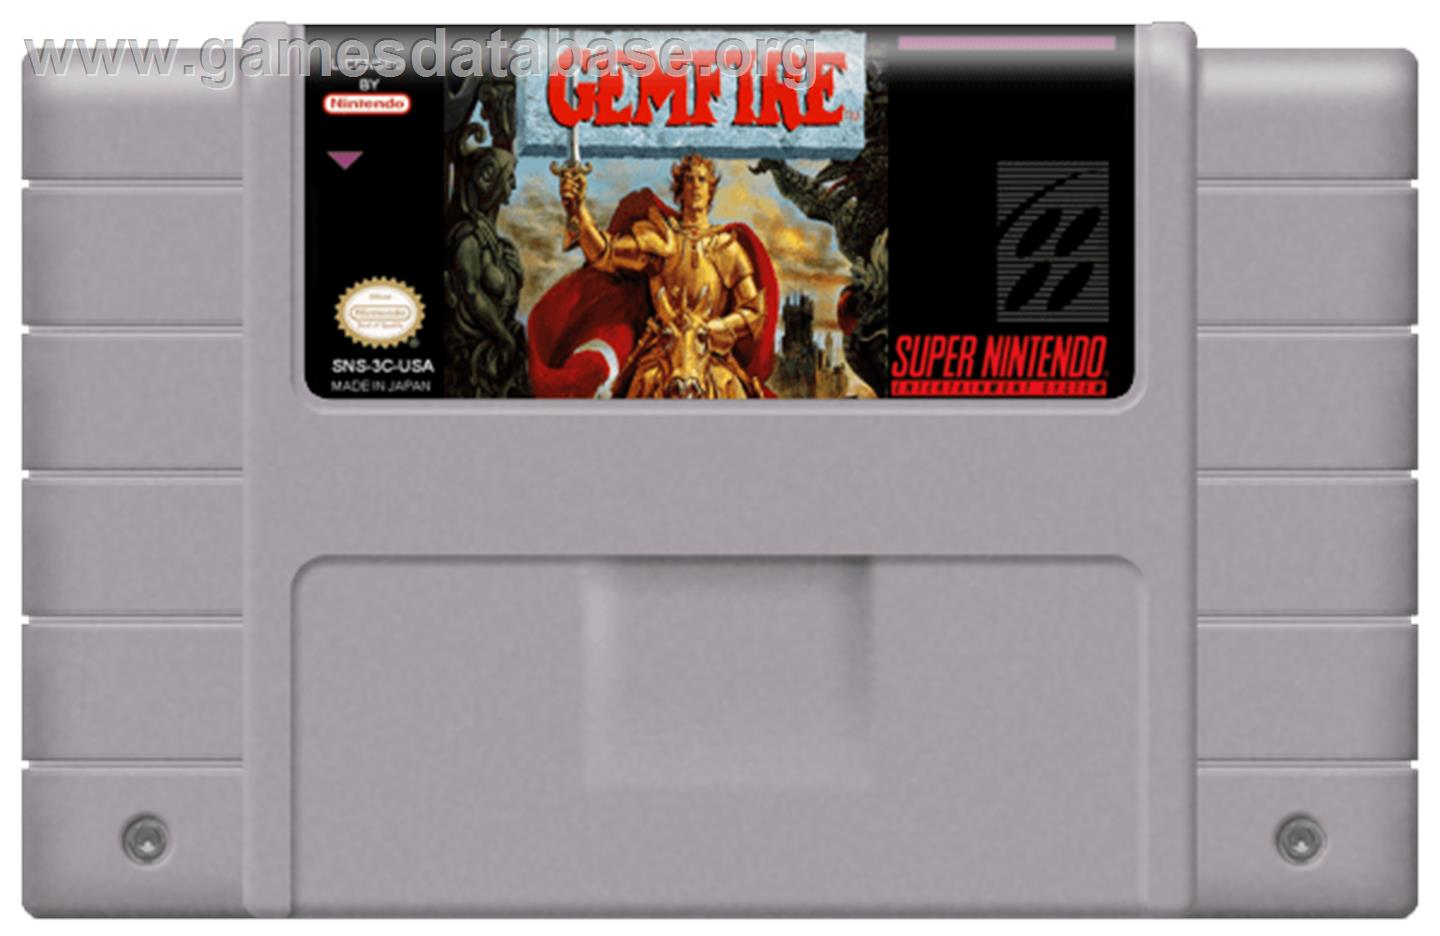 Gemfire - Nintendo SNES - Artwork - Cartridge